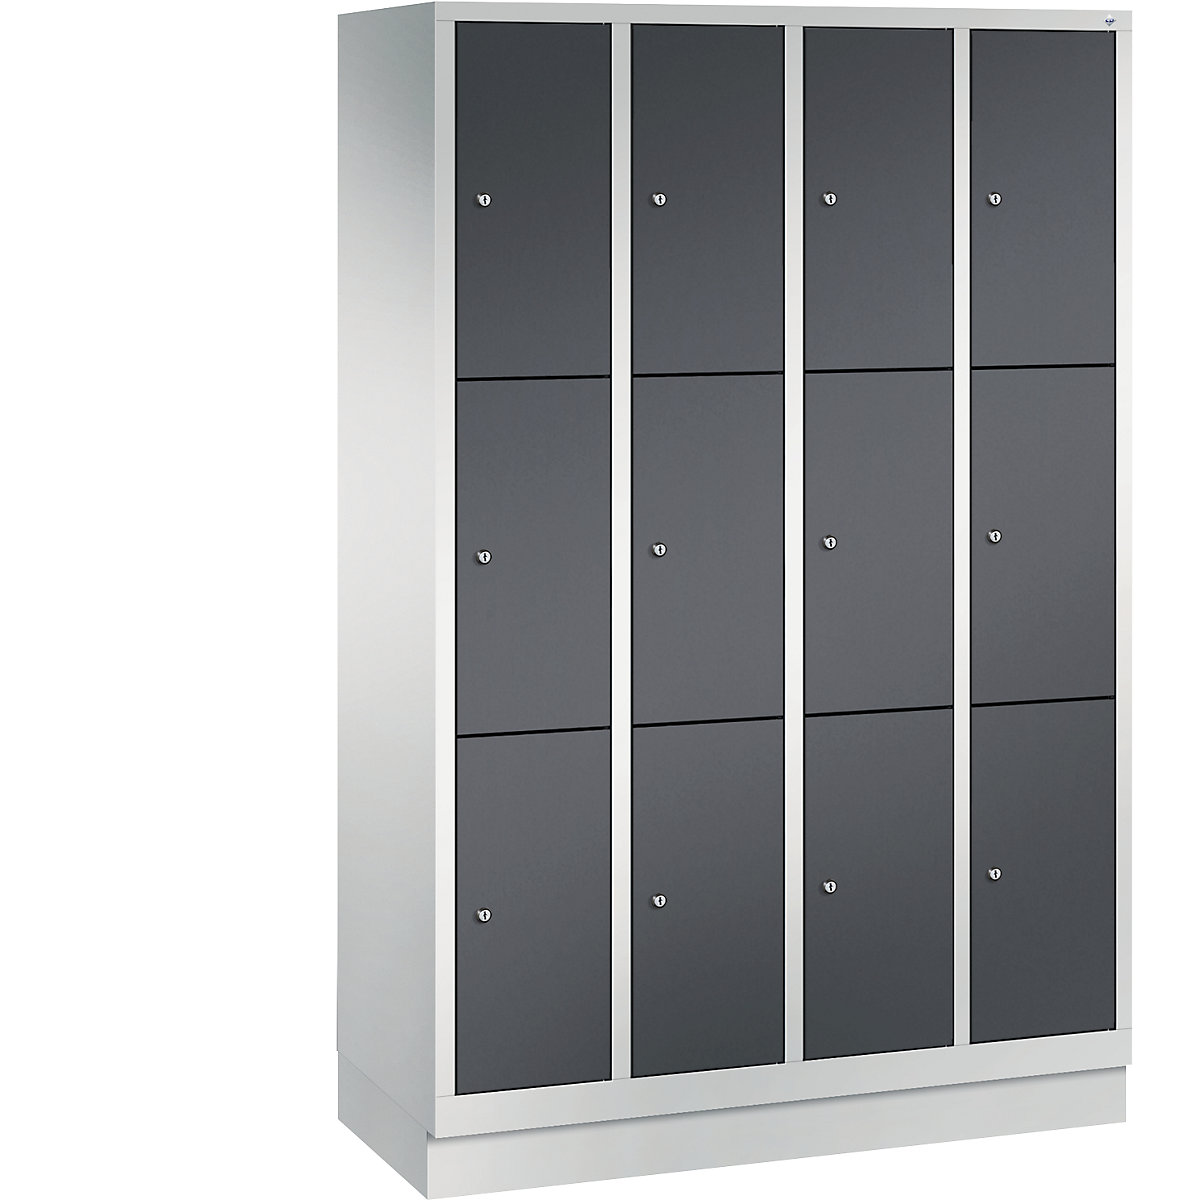 Armario de compartimentos CLASSIC con zócalo – C+P, 4 módulos, cada uno con 3 compartimentos, anchura de módulo 300 mm, gris luminoso / gris negruzco-12